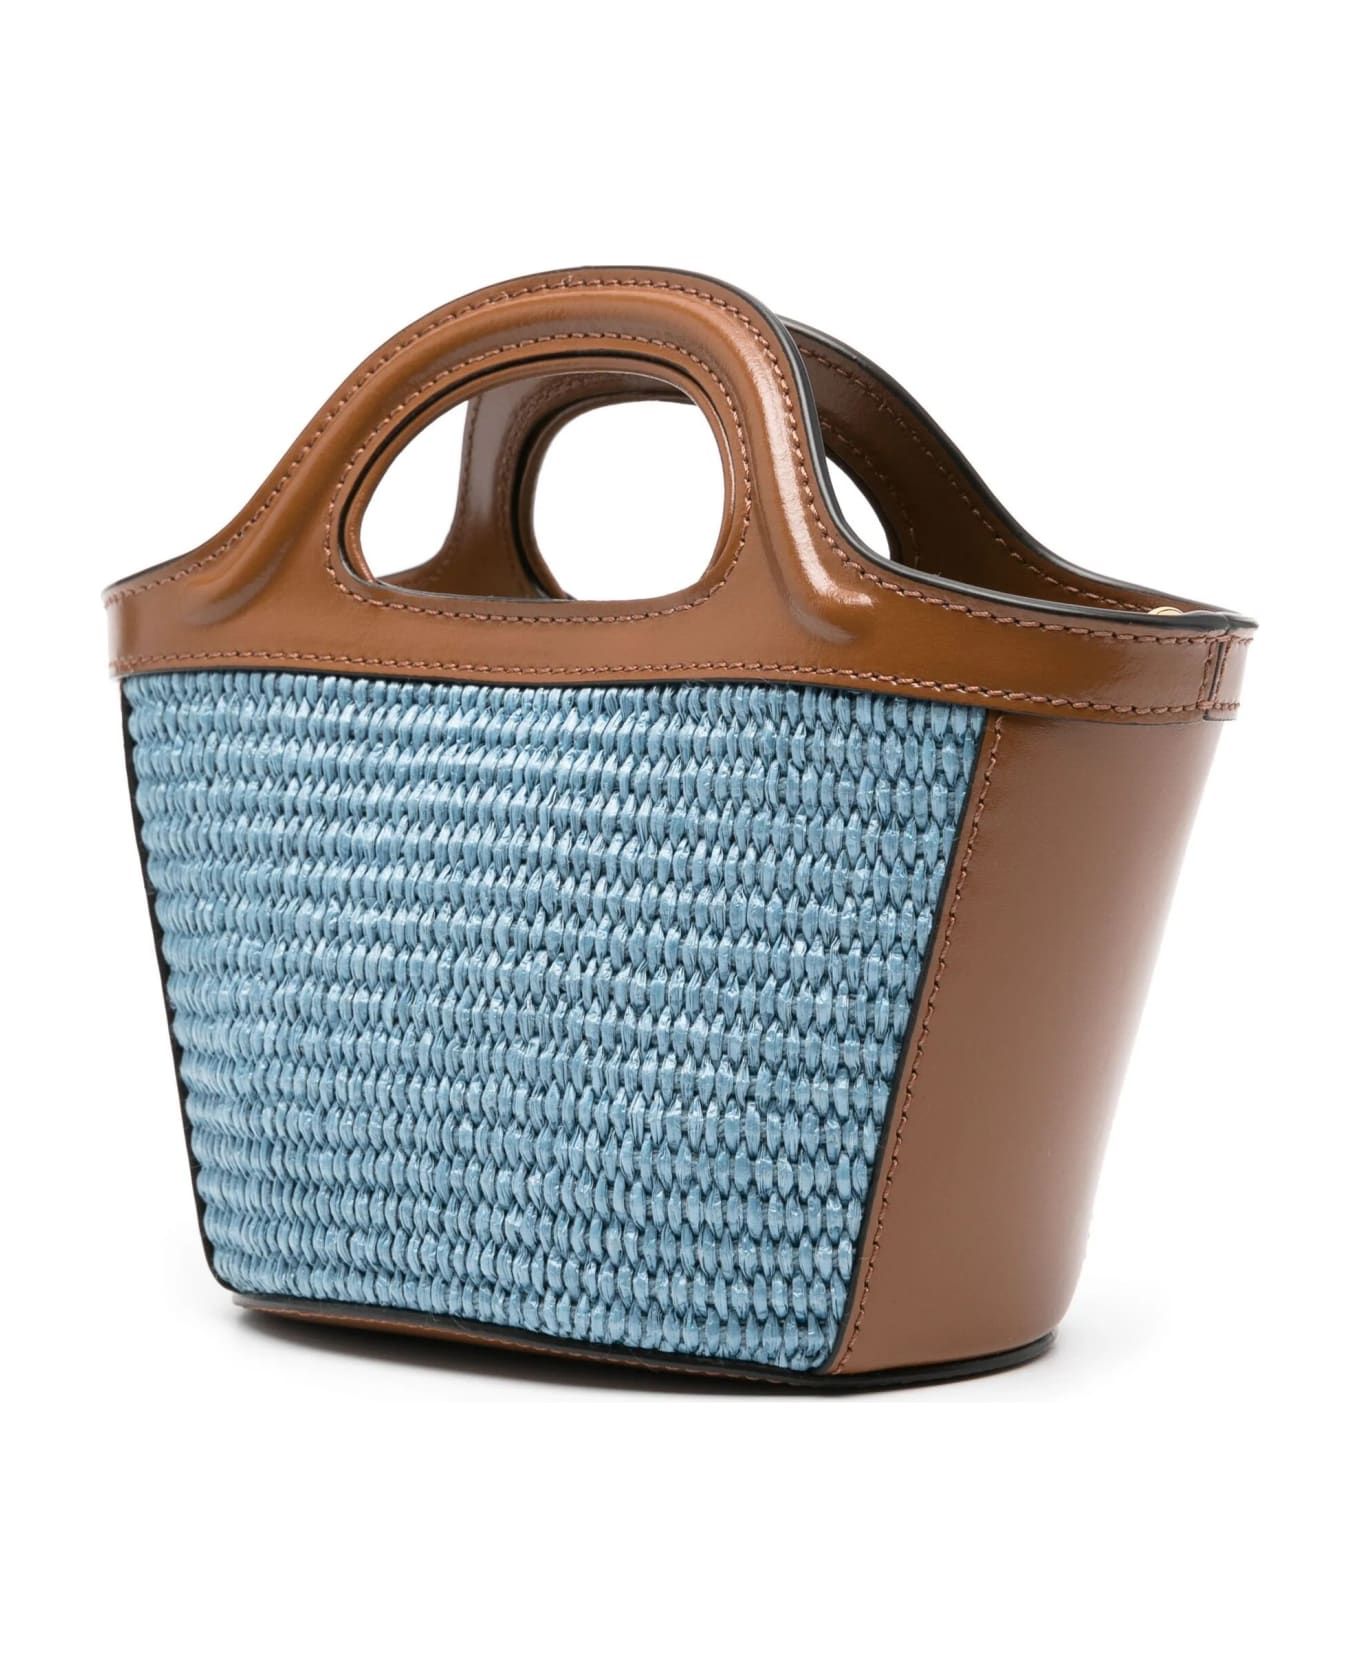 Marni Micro Tropicalia Summer Bag In Brown Leather And Light Blue Raffia - Brown